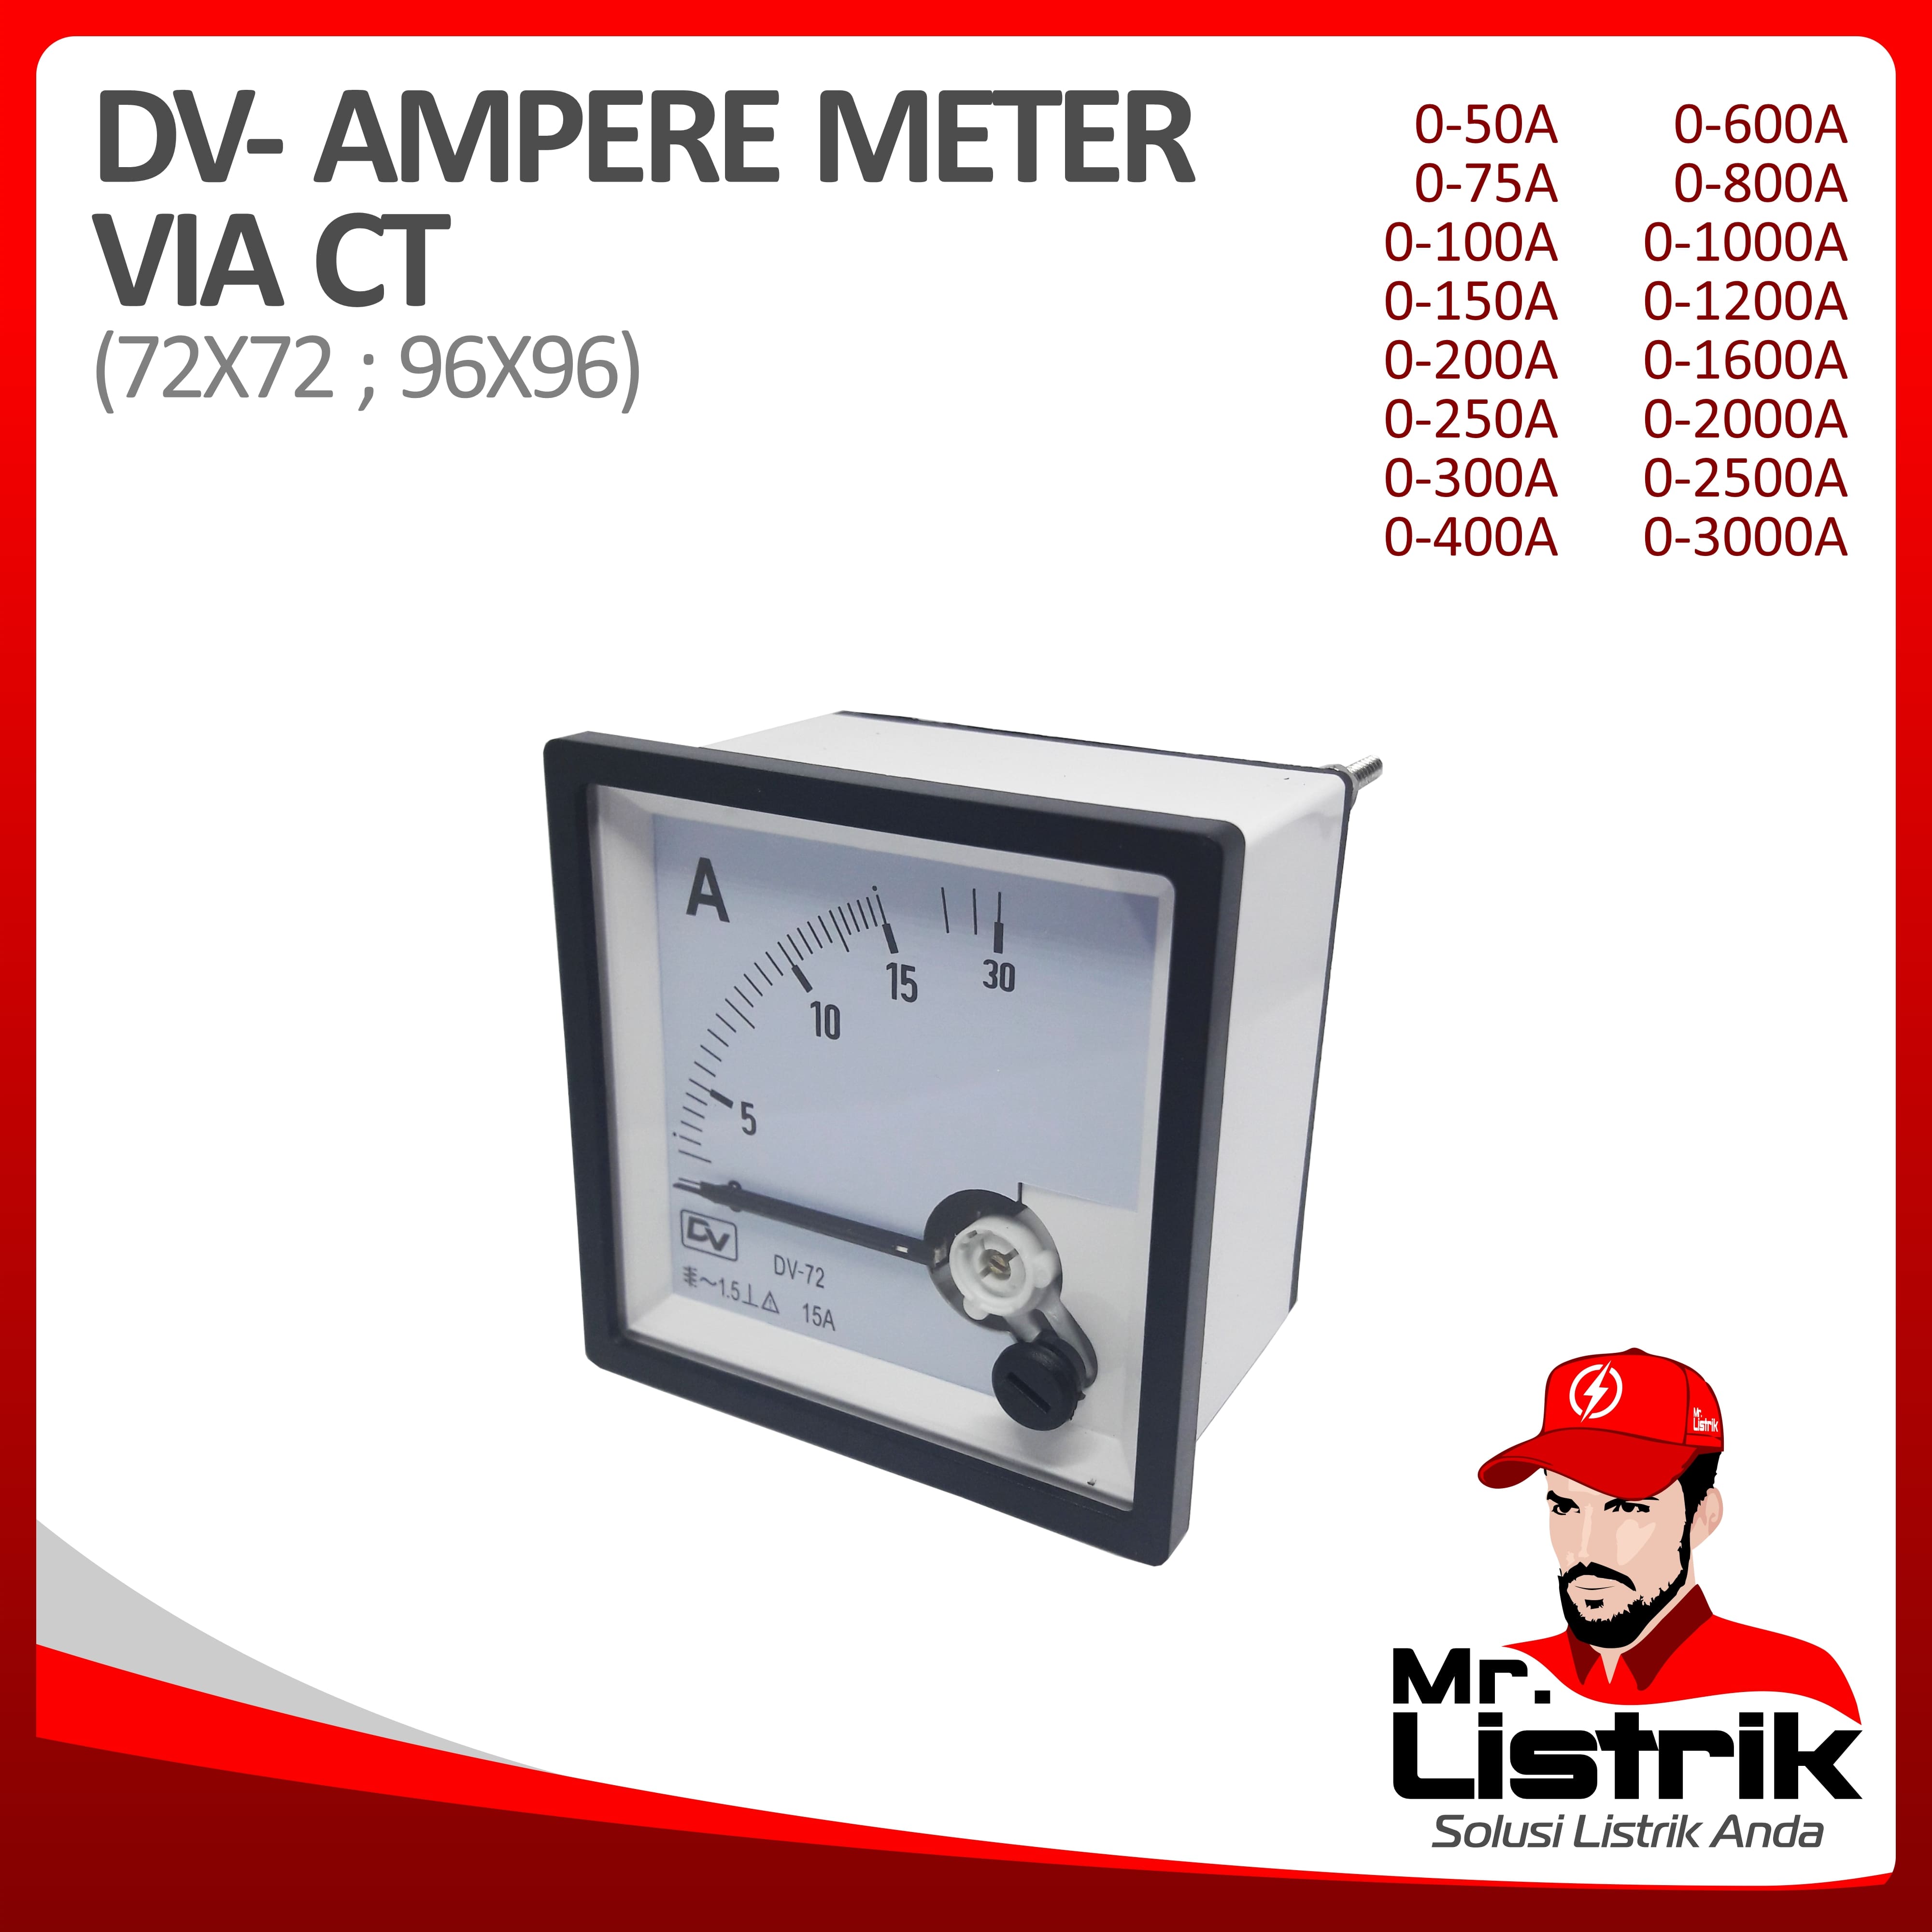 Amperemeter Via CT DV 96x96 - 200A